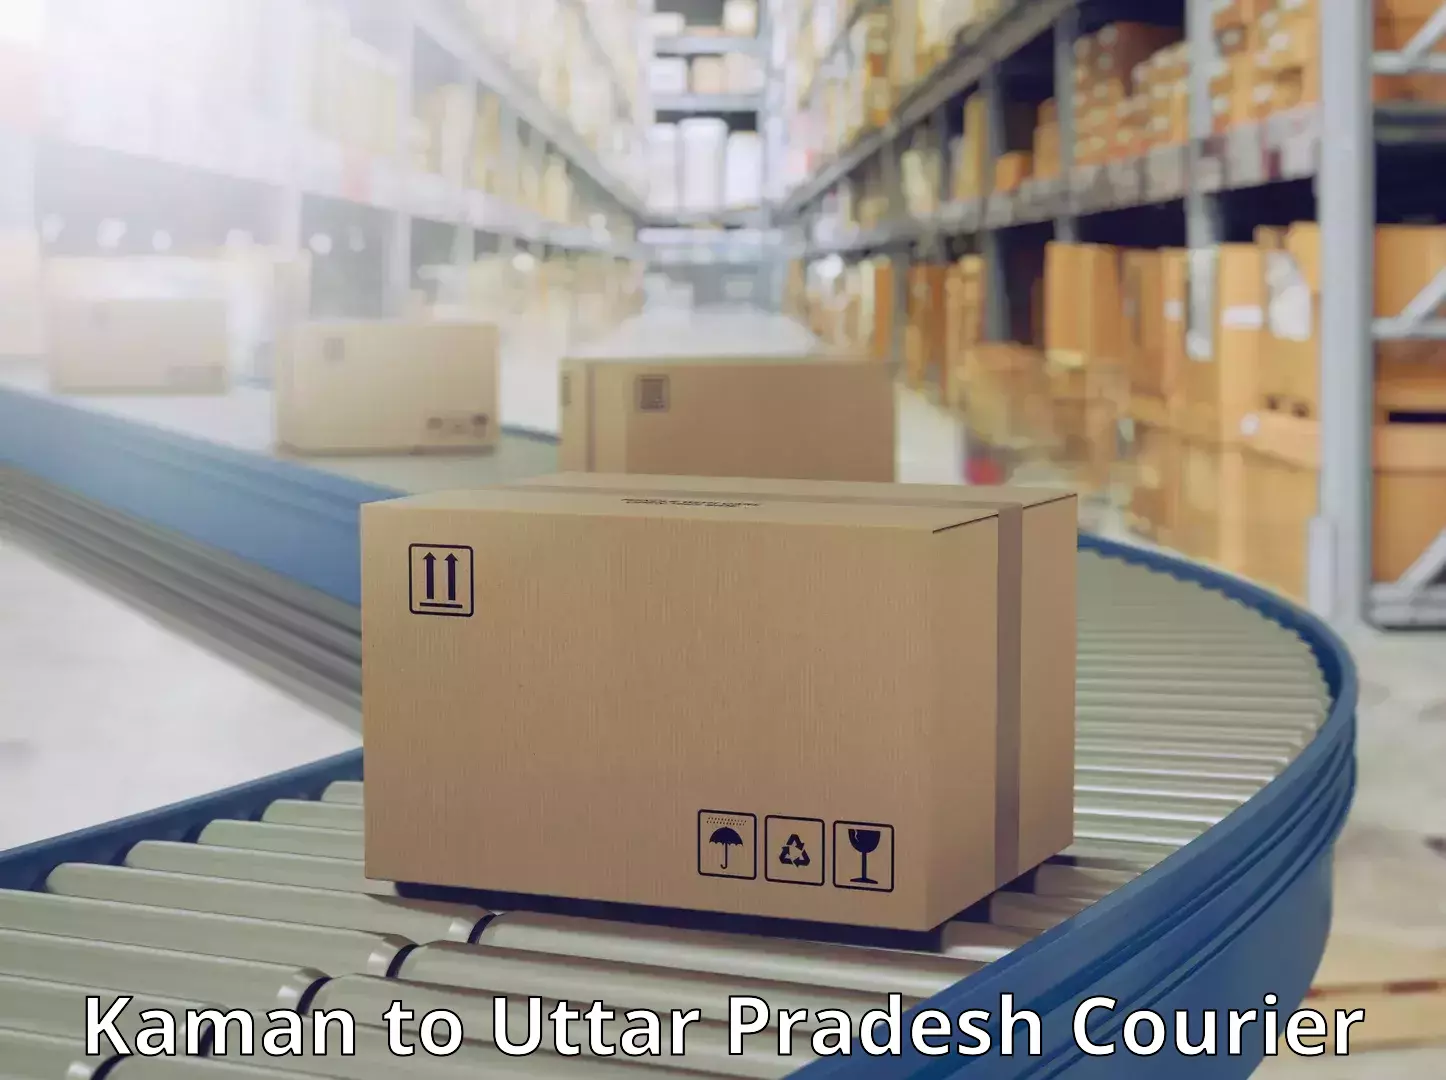 Modern delivery technologies Kaman to Uttar Pradesh